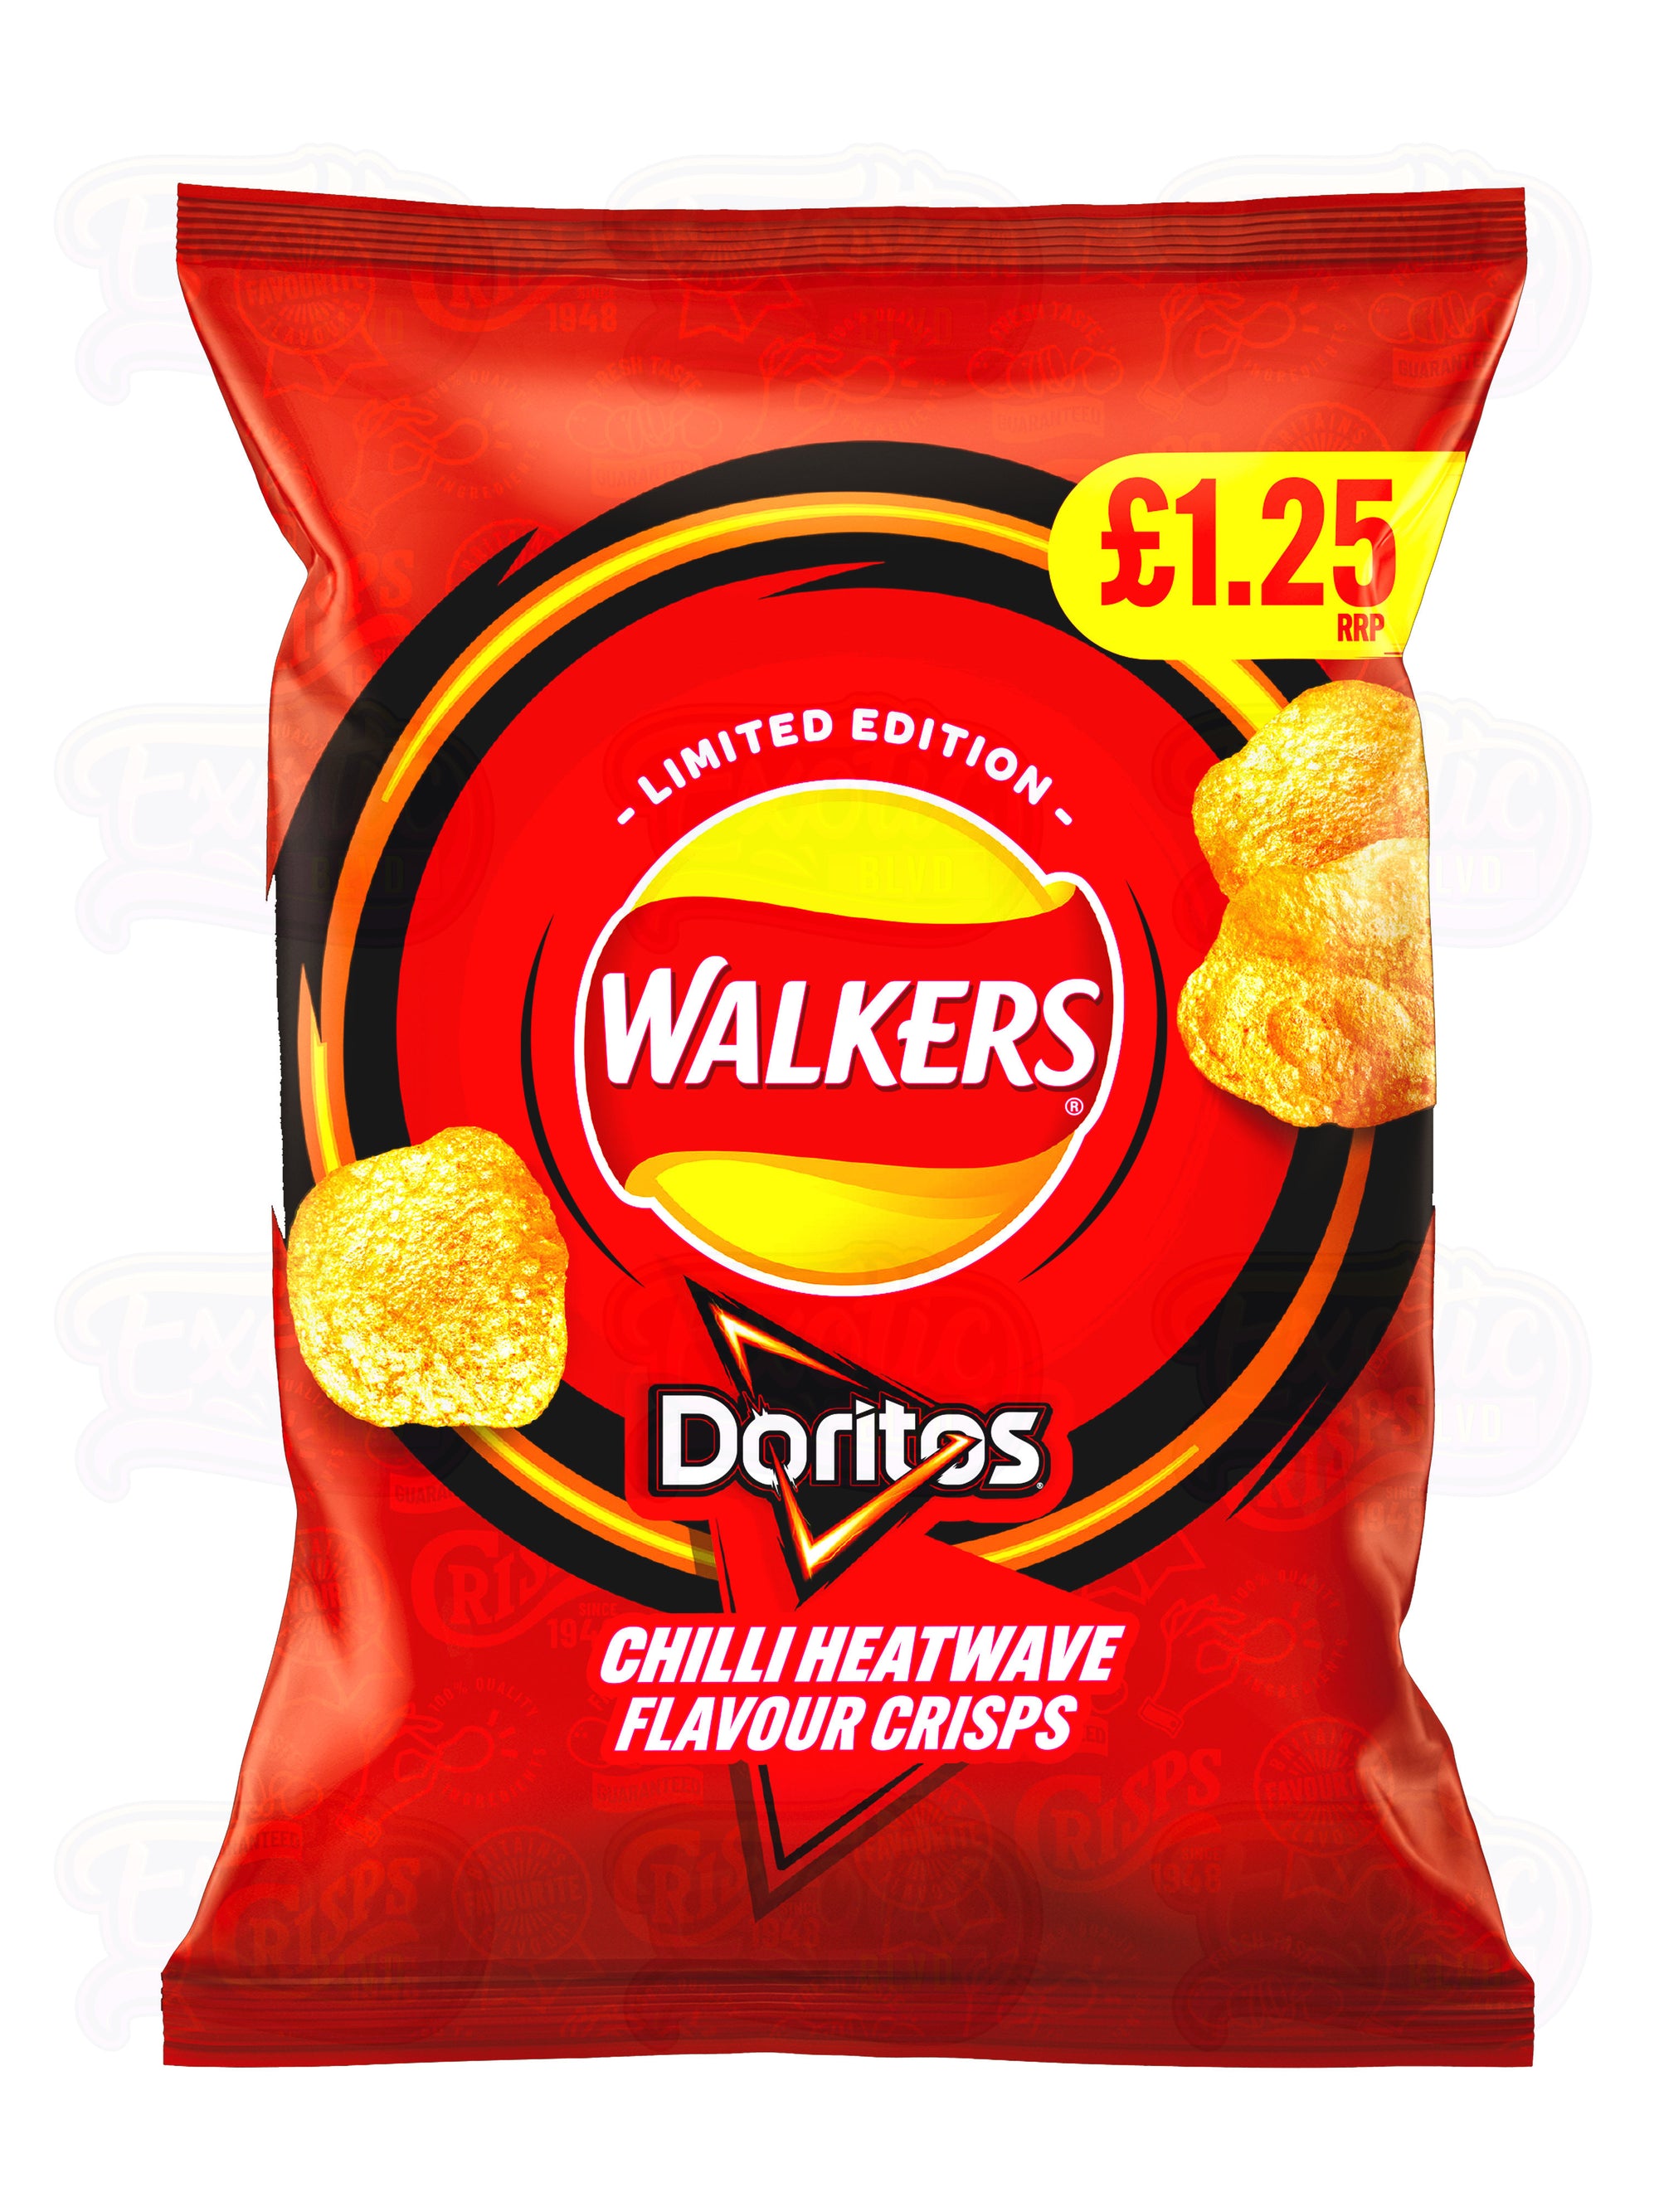 Walkers Doritos Chili Heatwave